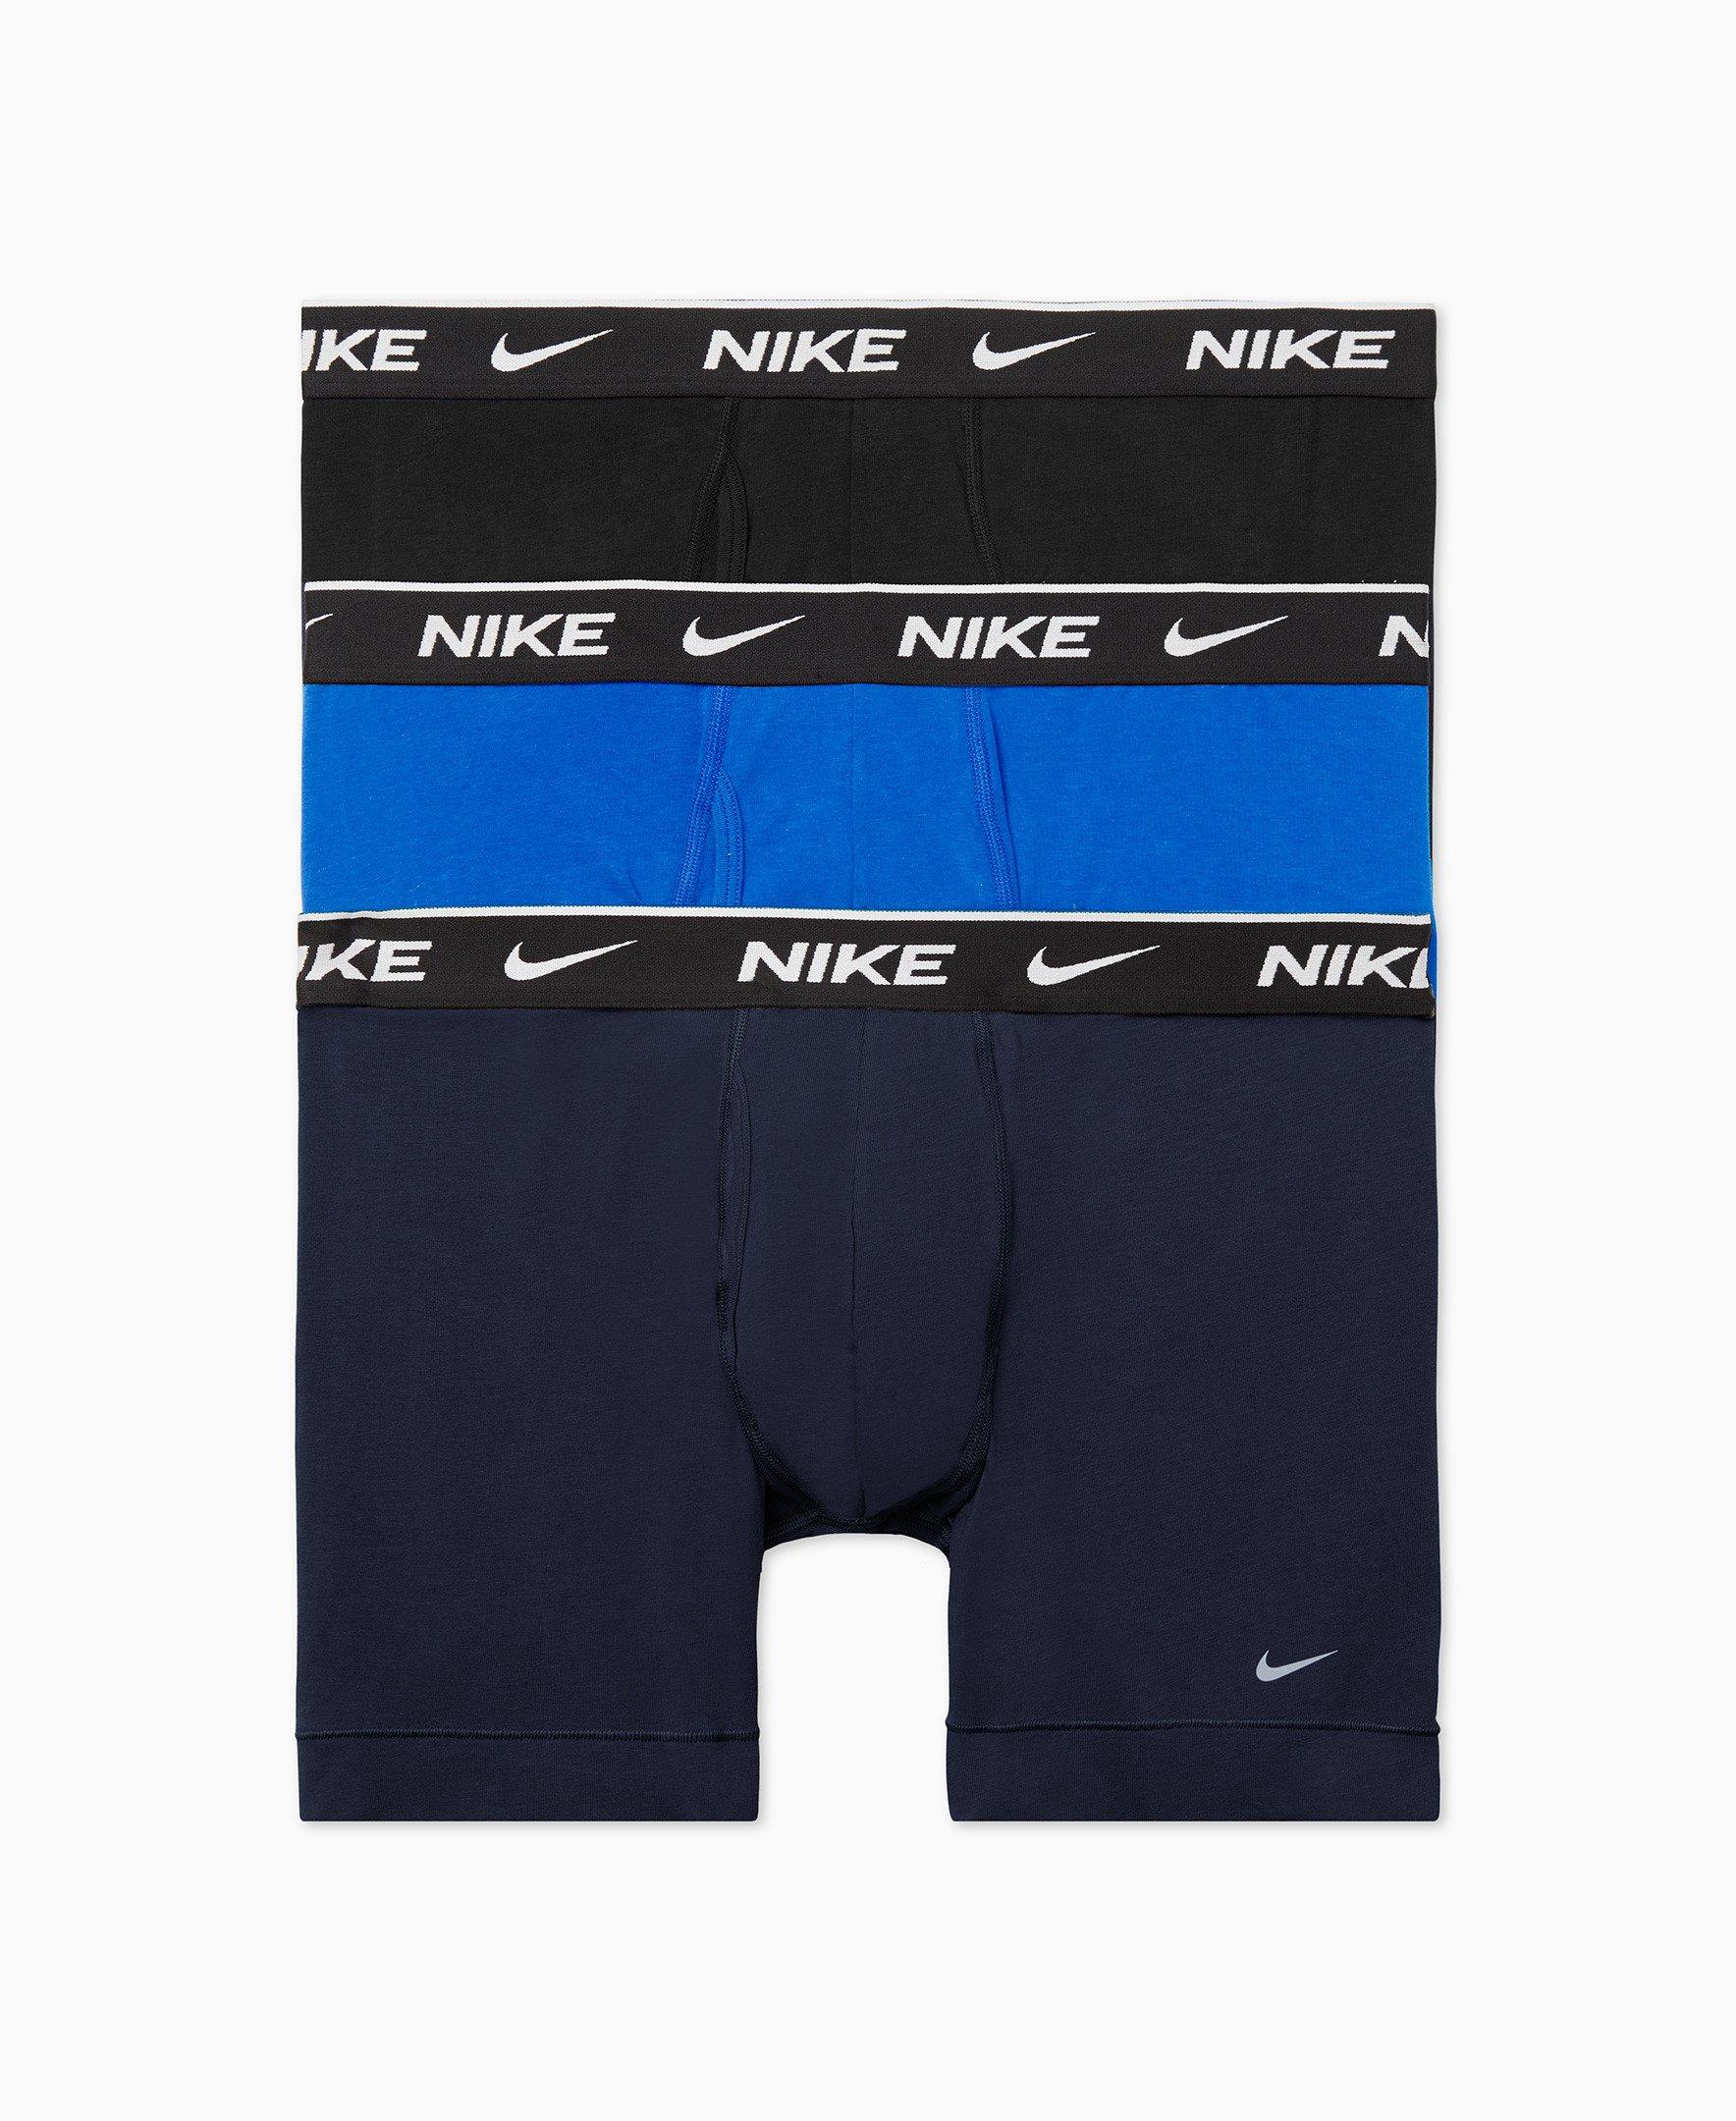 Nike cotton stretch 3 pack boxer briefs in orange/khaki/black